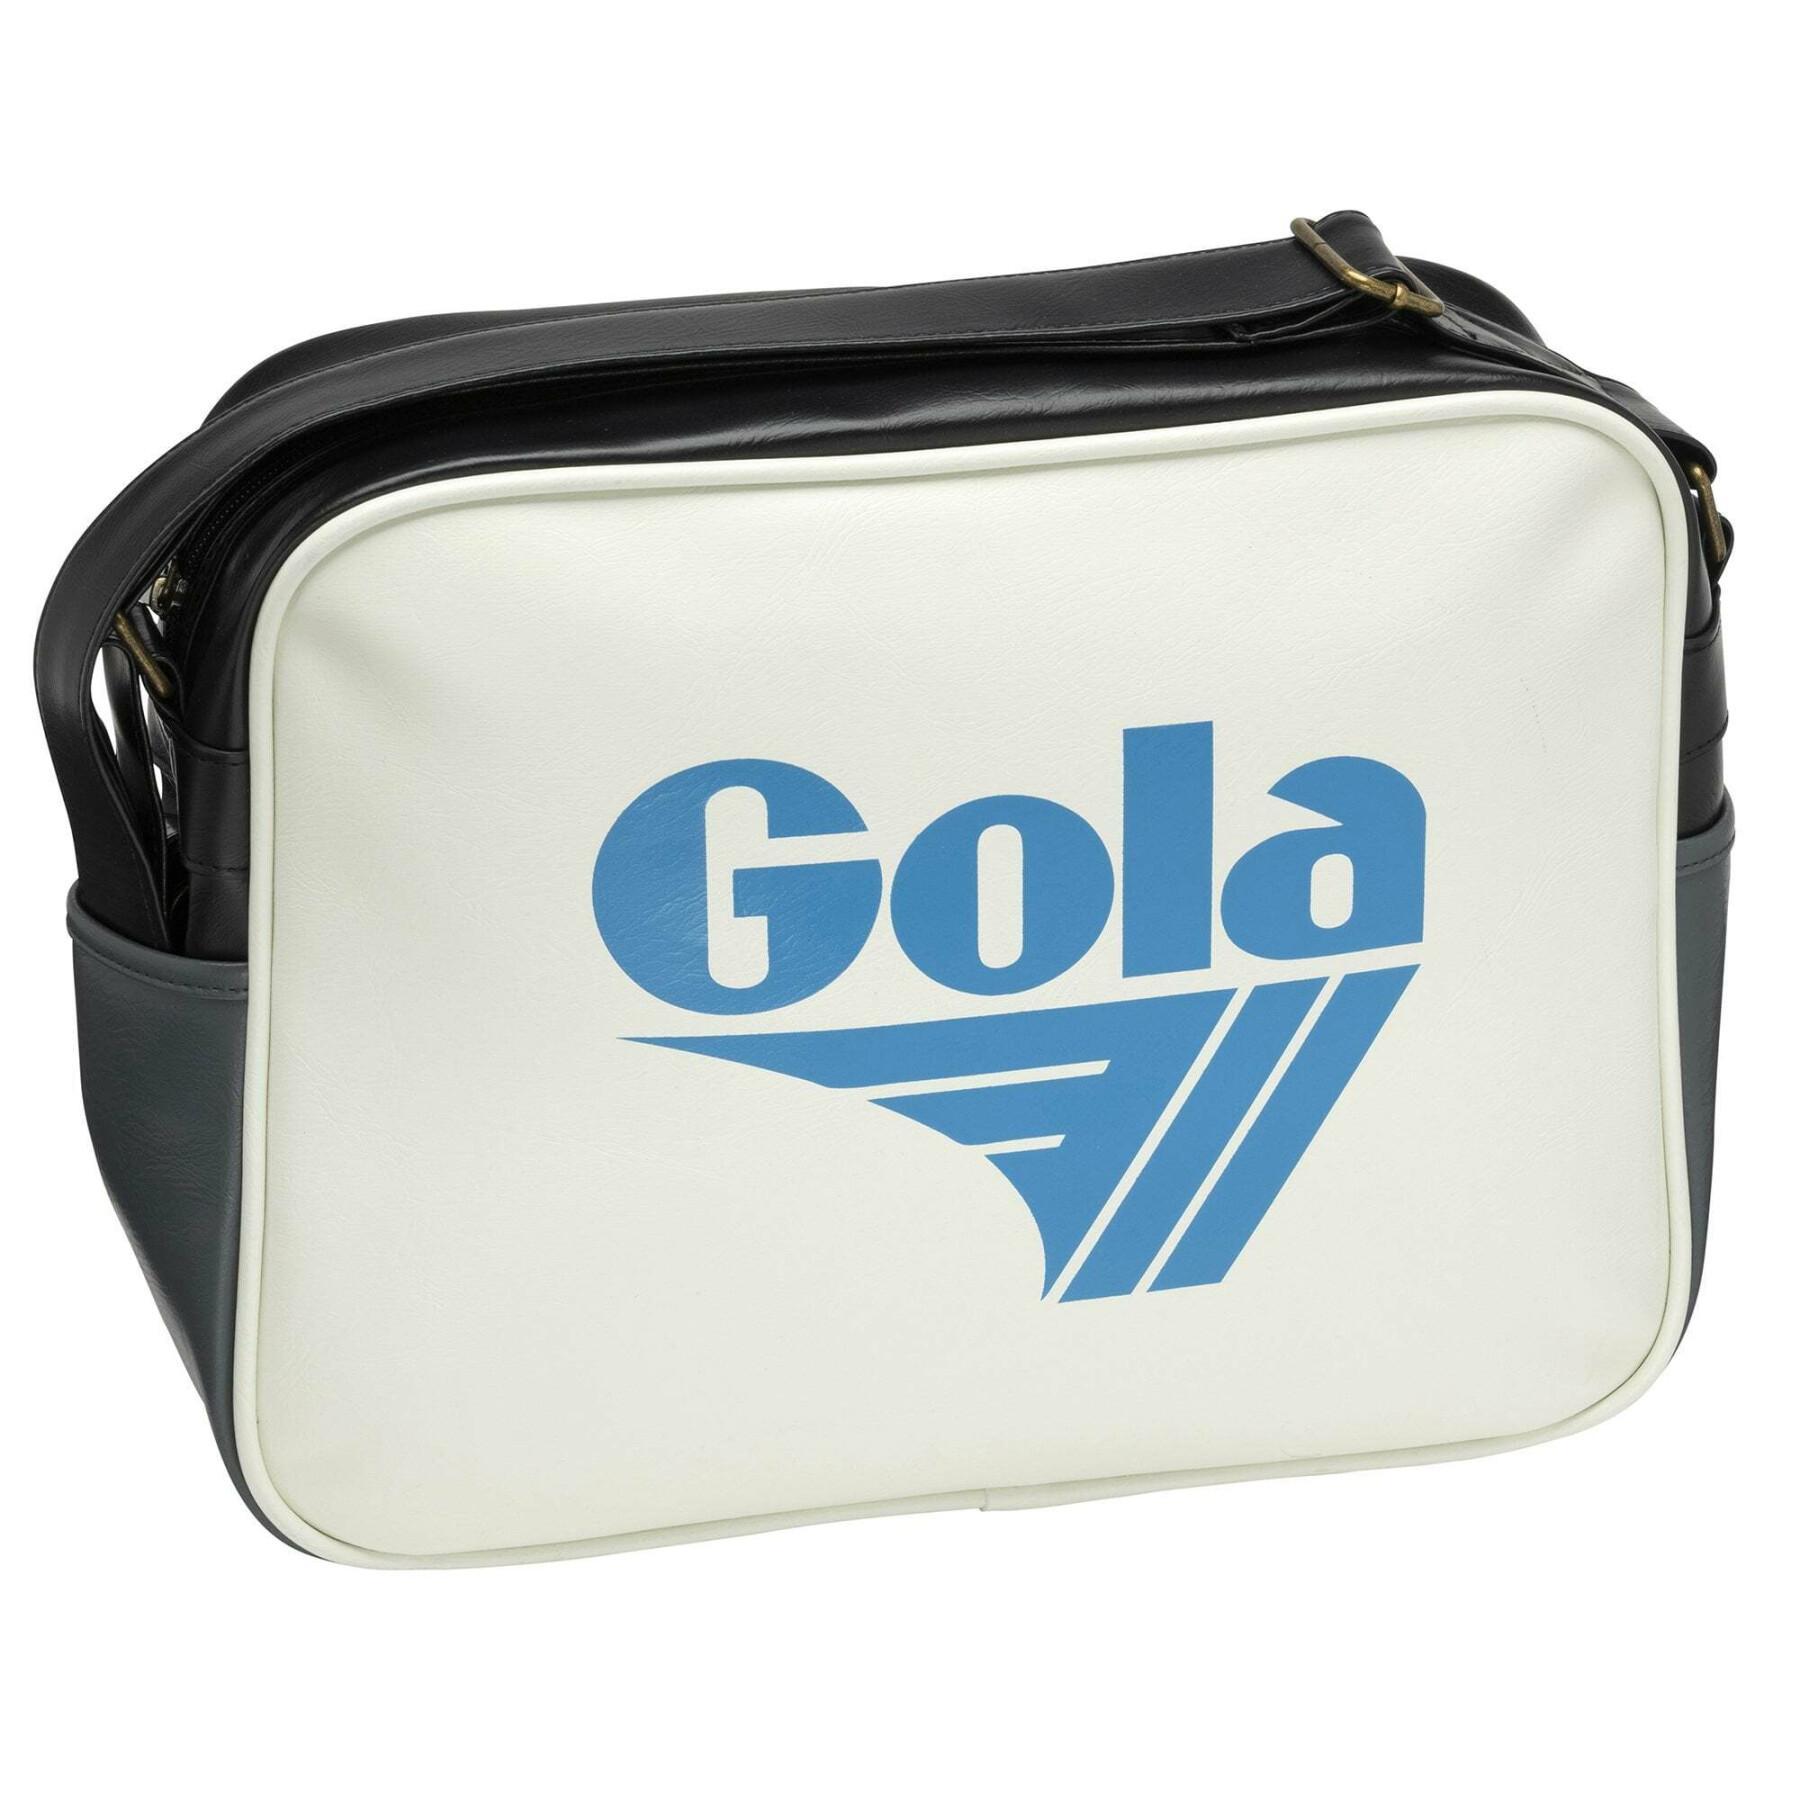 Messenger bag Gola Redford